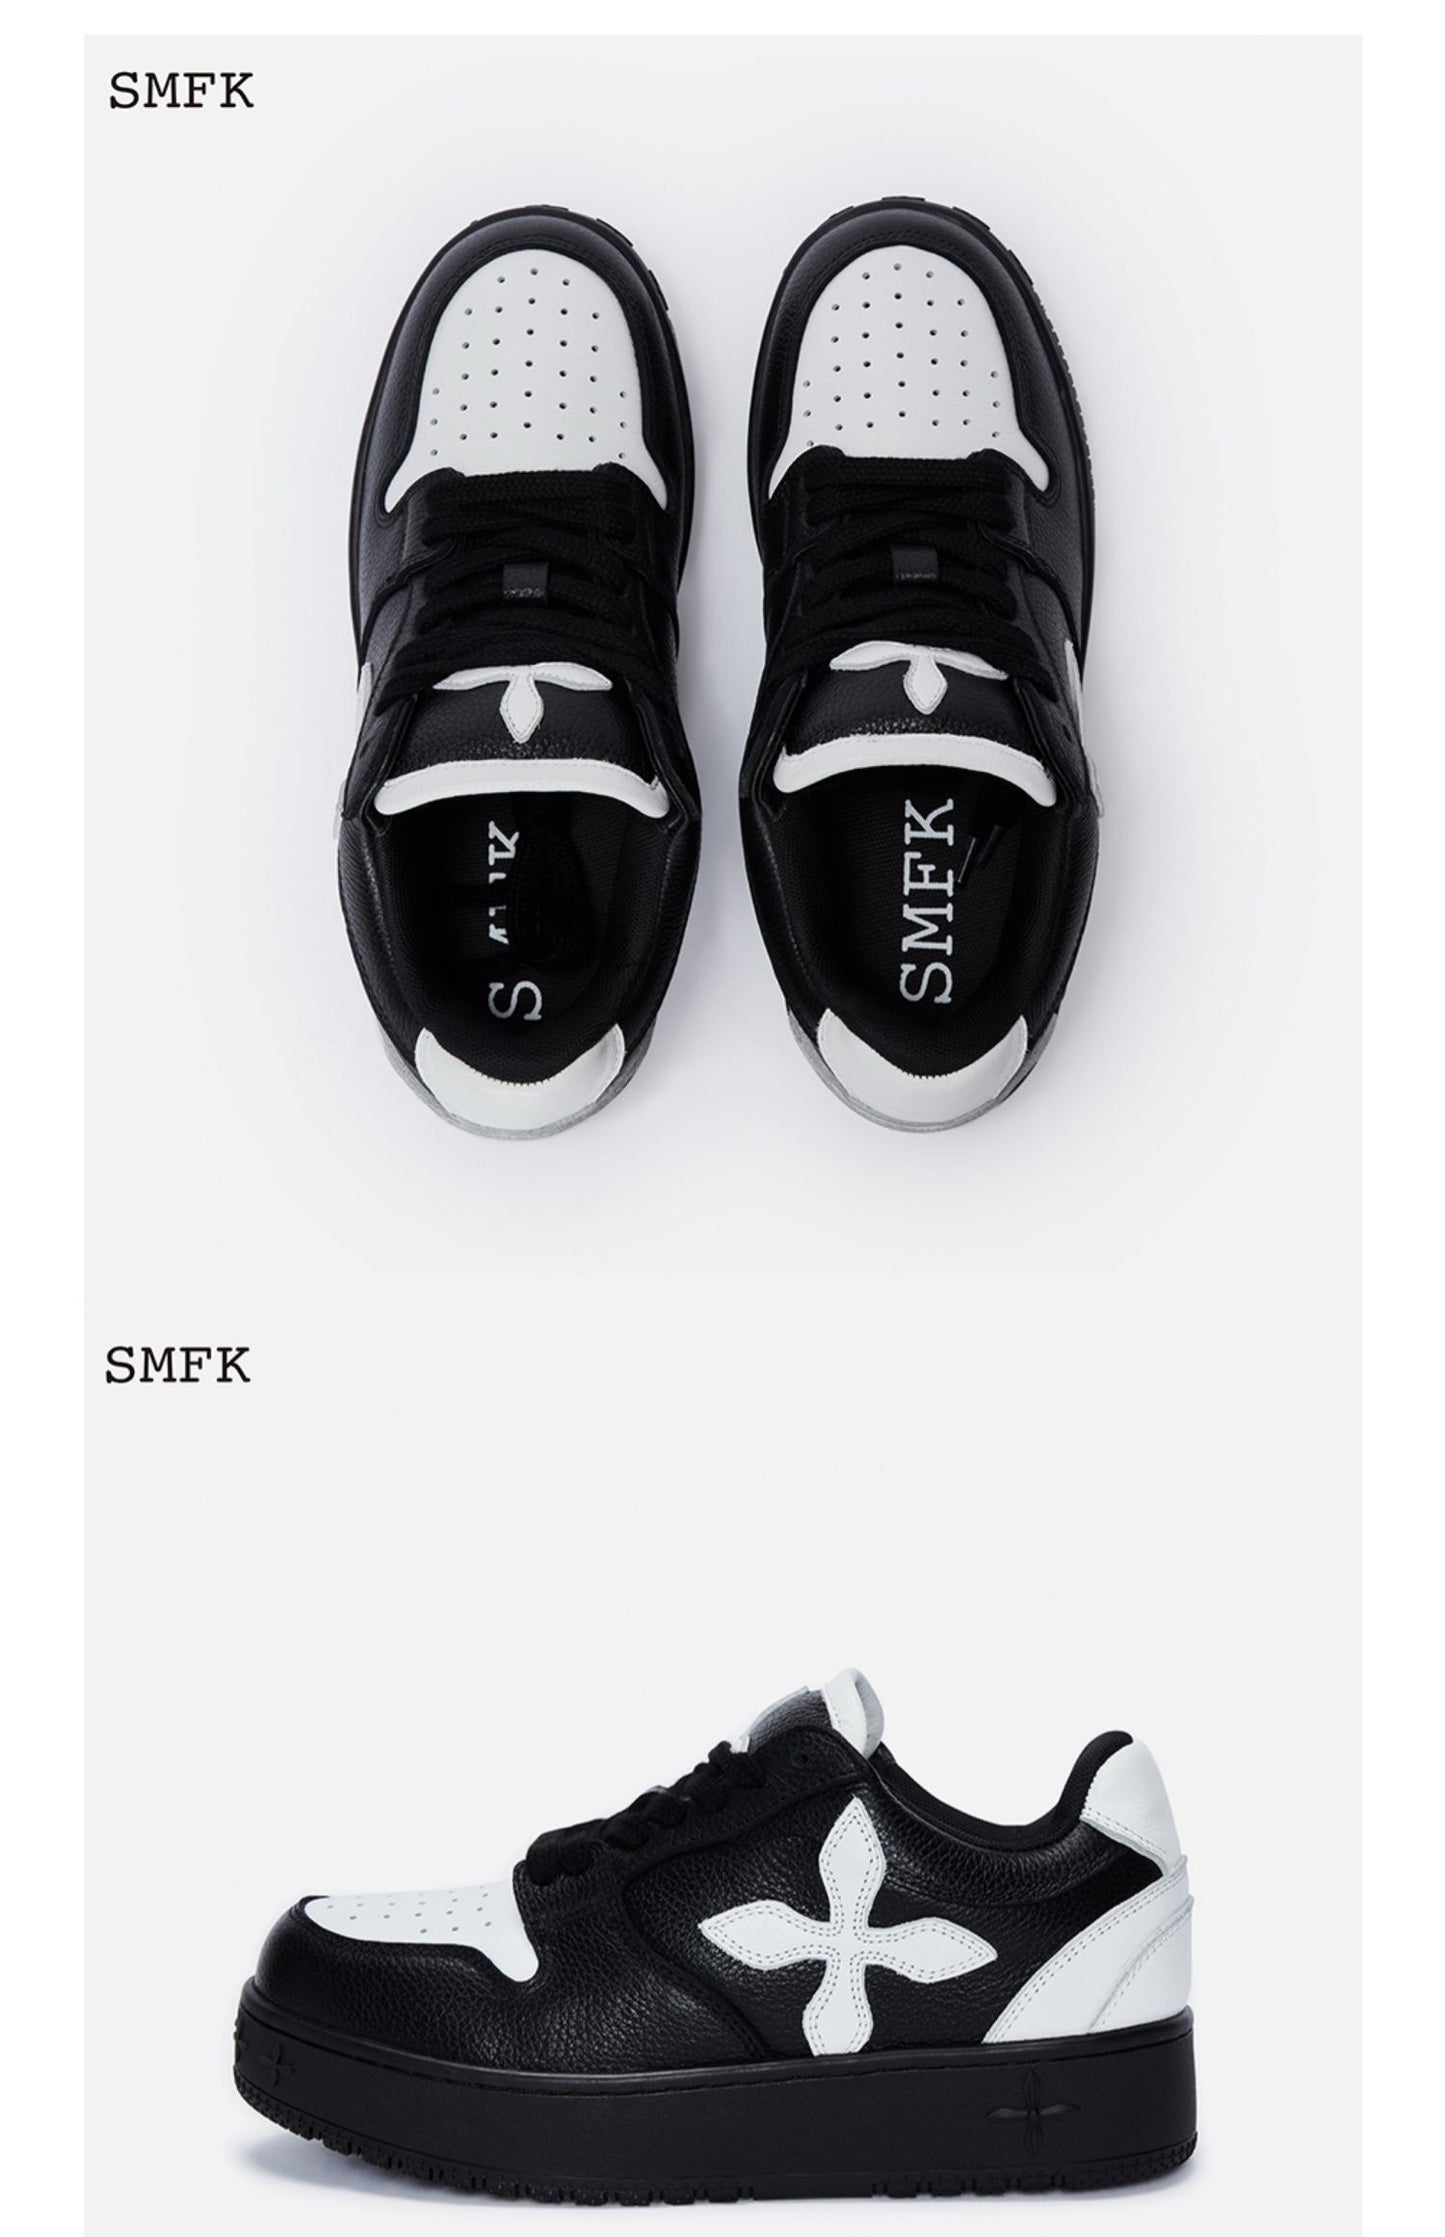 SMFK Classic Skater Sneakers - Midnight Black - Fixxshop